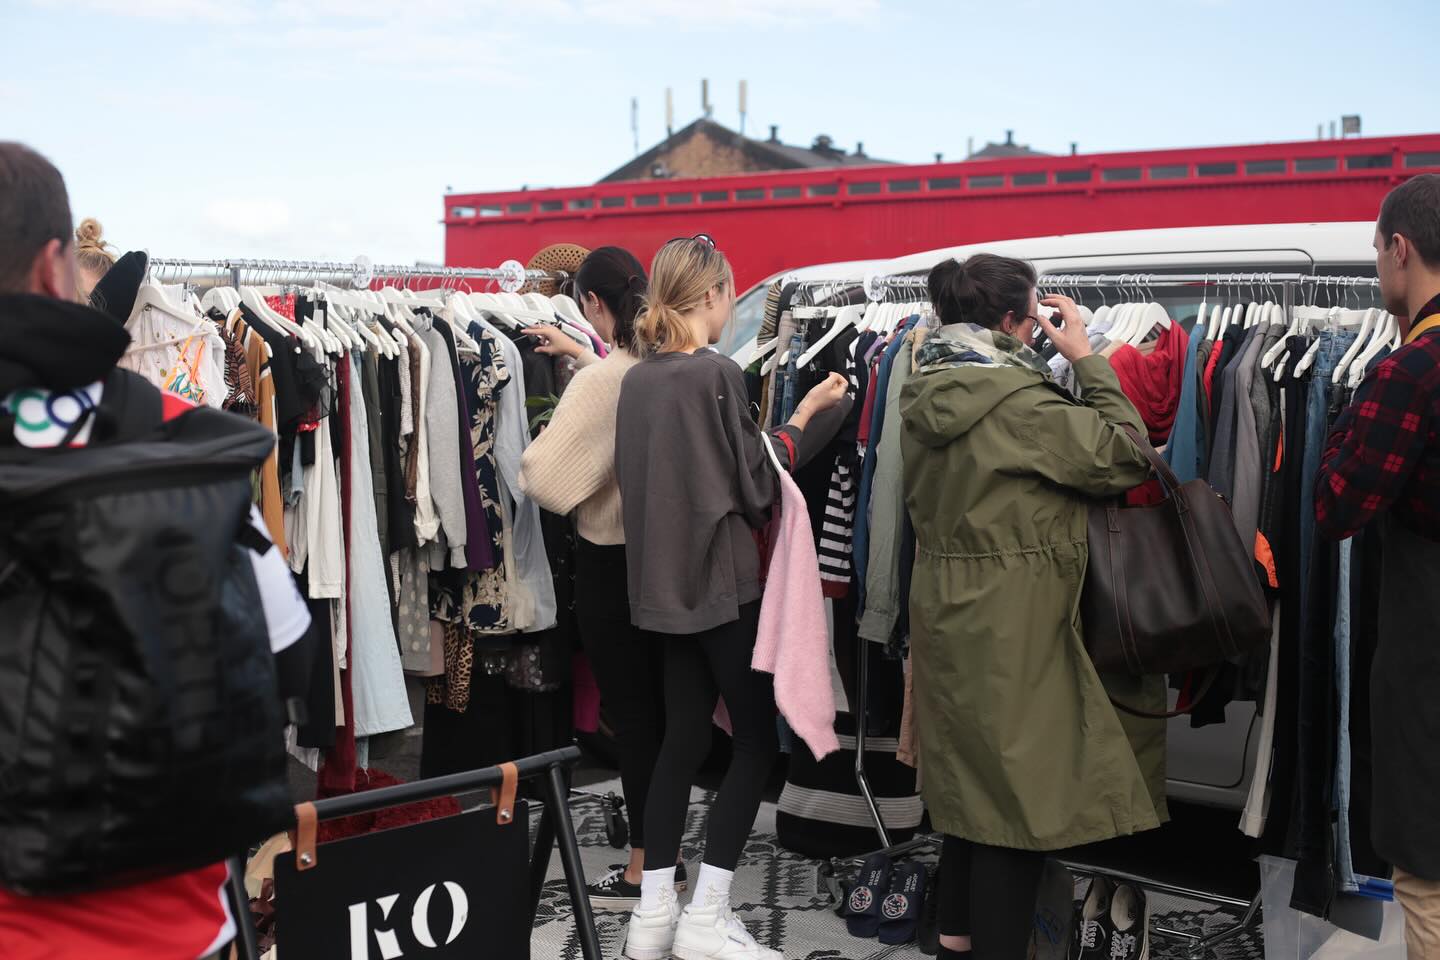 Shoppers rummaging through Koha Apparel's clothing racks at Auckland Central Market